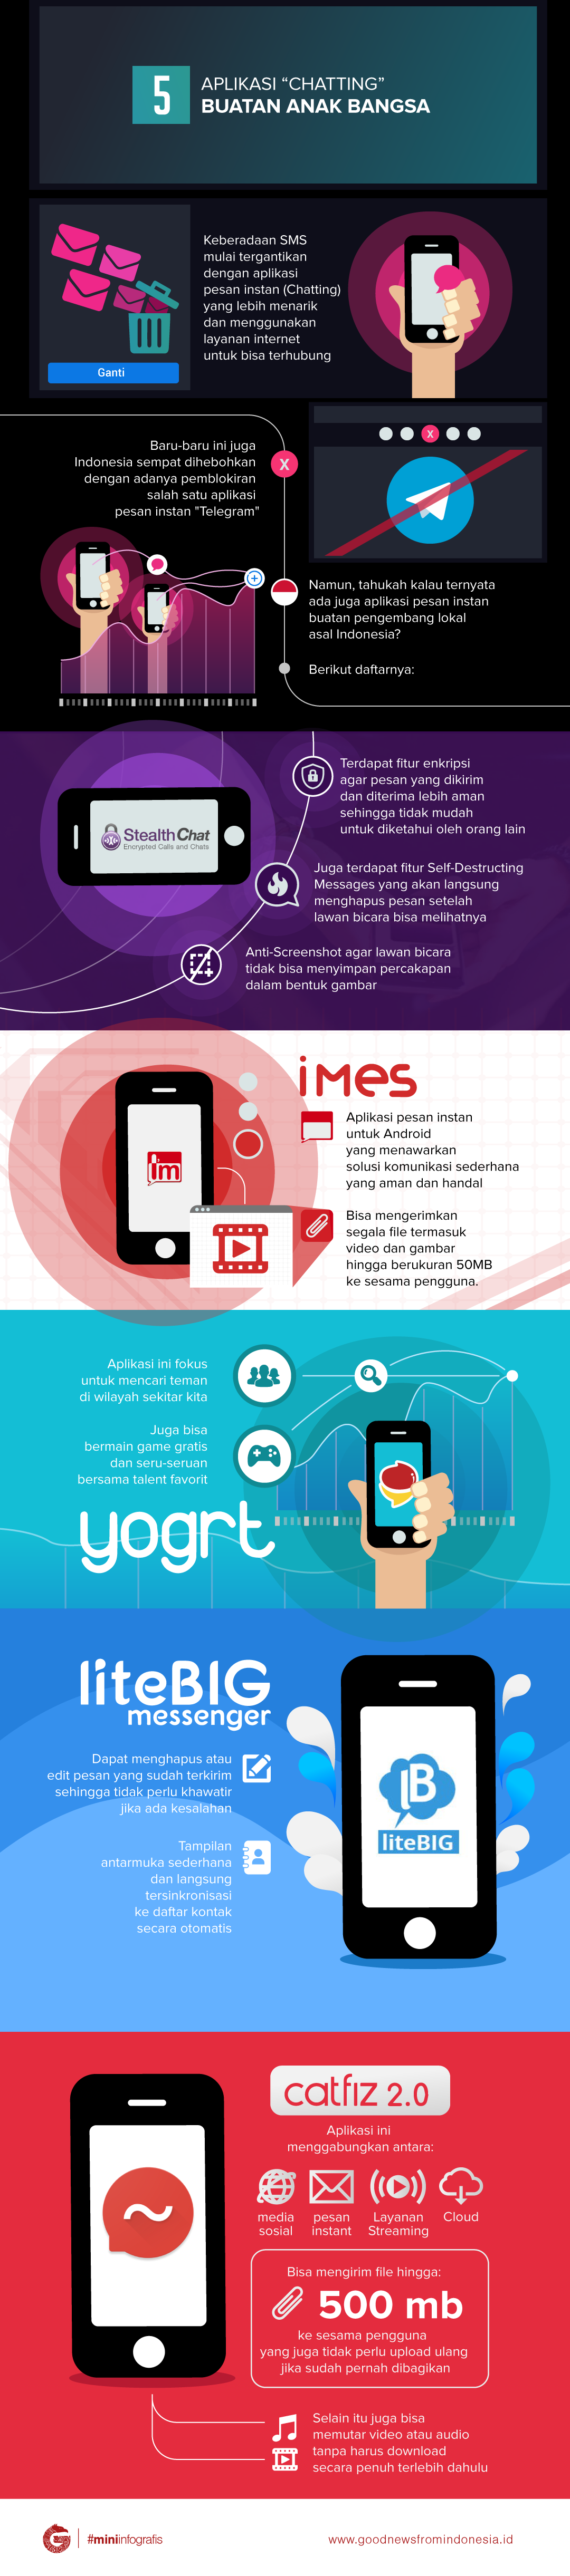 Aplikasi Chatting Buatan Indonesia Majalah Gadget Riset 9562